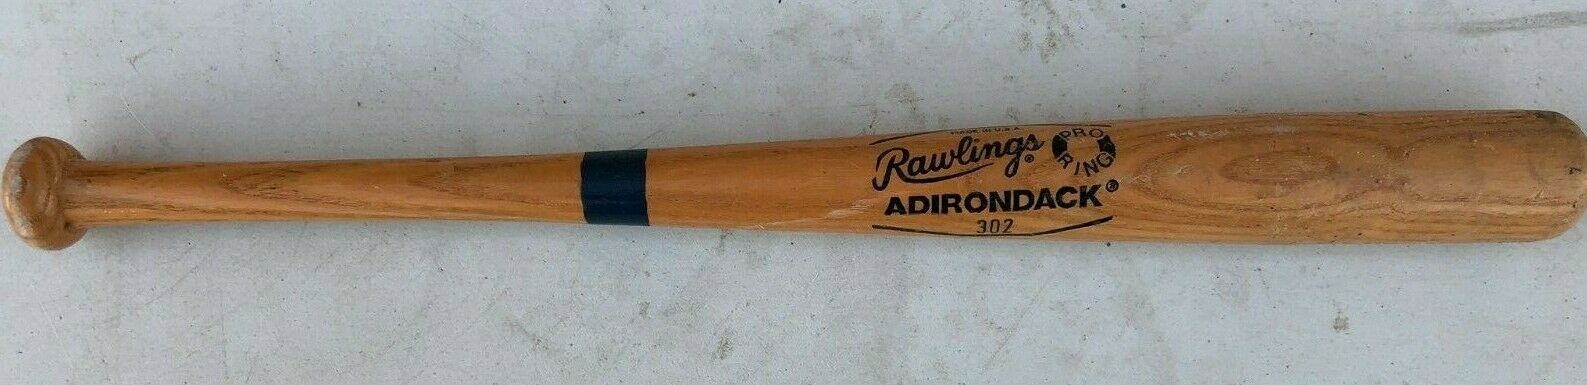 Mini Baseball Bat Rawlings Adirondack 302 Pro Ring 17